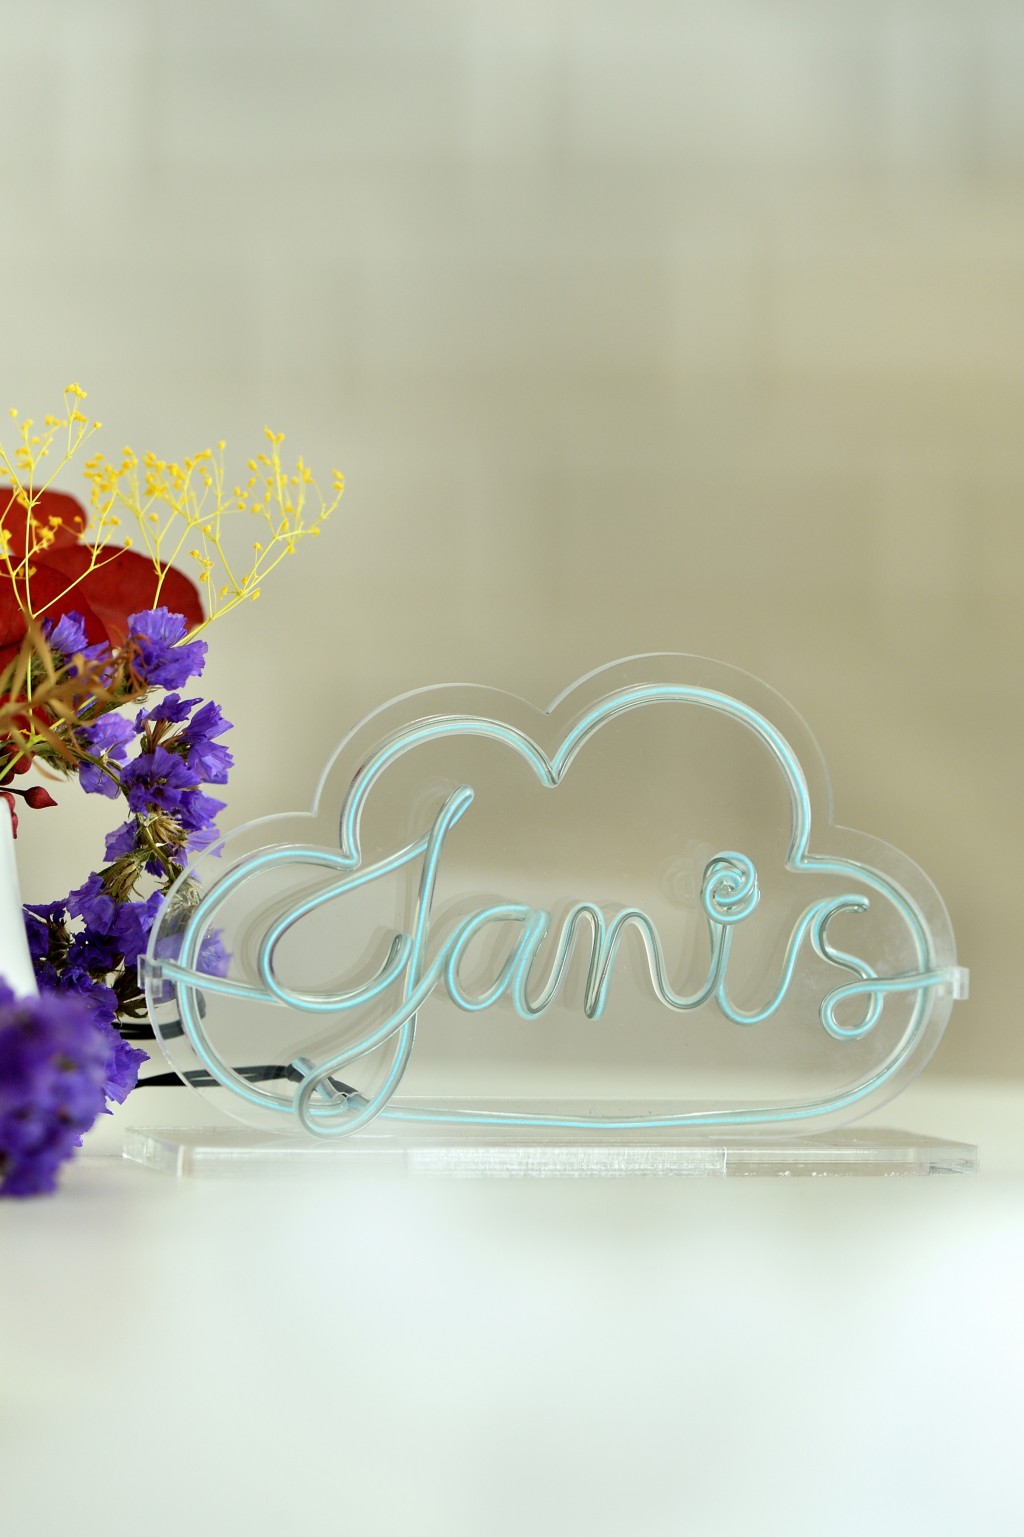 Clarins期間限定體驗館｜雲朵霓虹燈工作坊製作專屬名字的雲朵霓虹燈，限選5個英文字母。